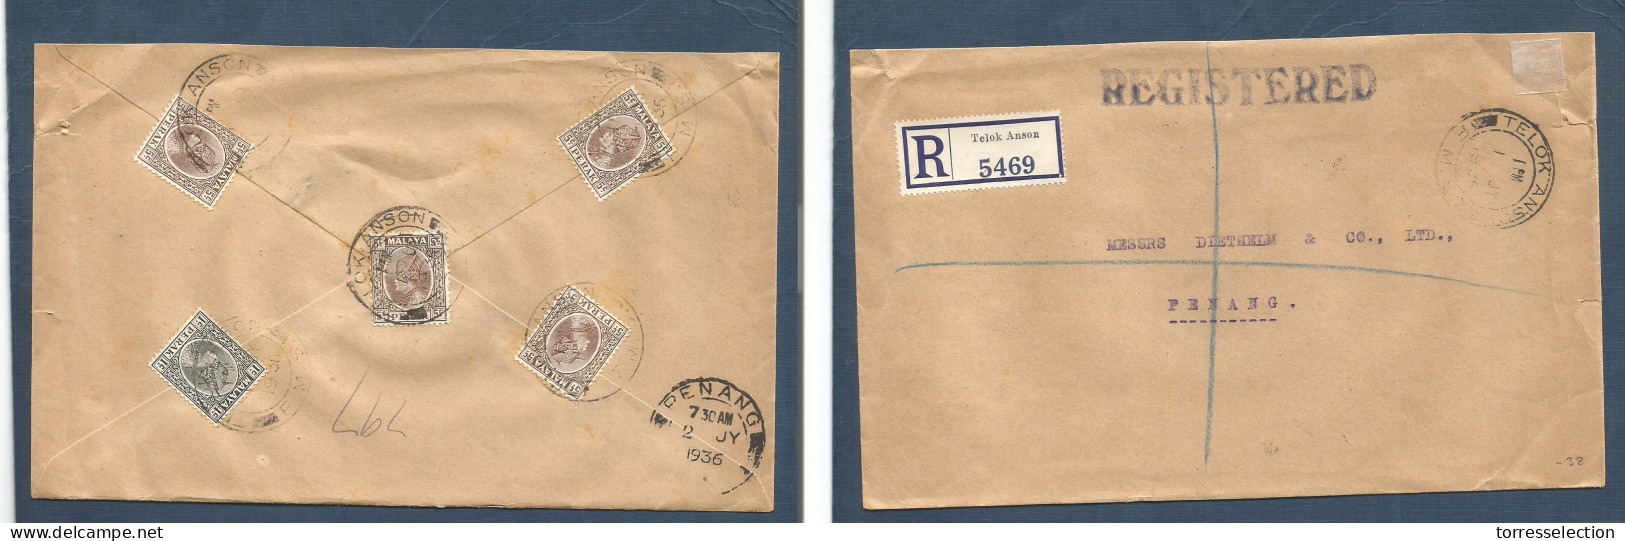 MALAYSIA. 1936 (1 July) Telok Anson - Penang. Via Sing. Registered Reverse Multifkd Perak Issue. VF. XSALE. - Malaysia (1964-...)